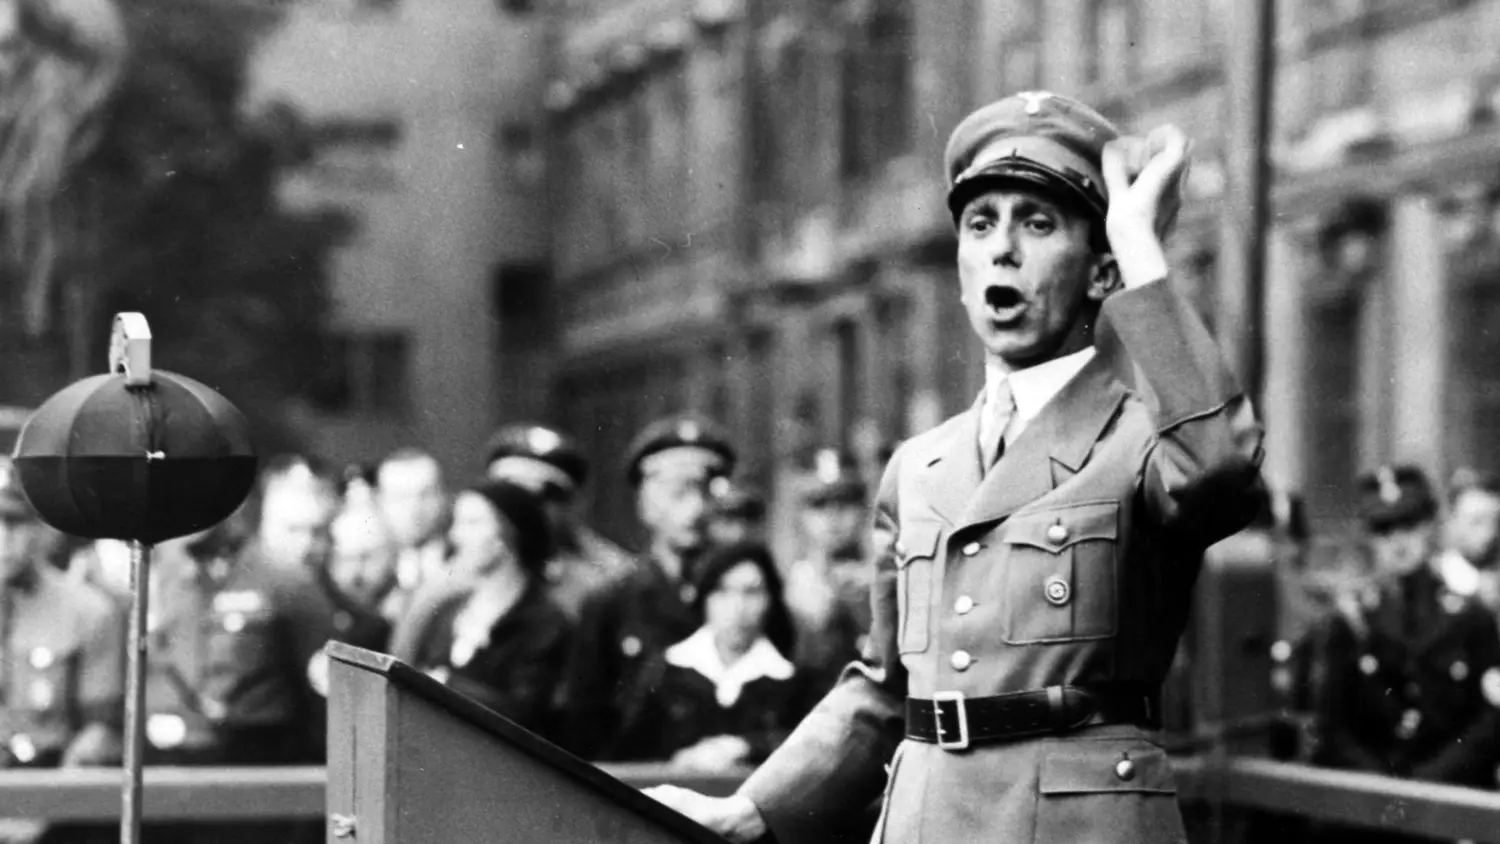 Goebbels 